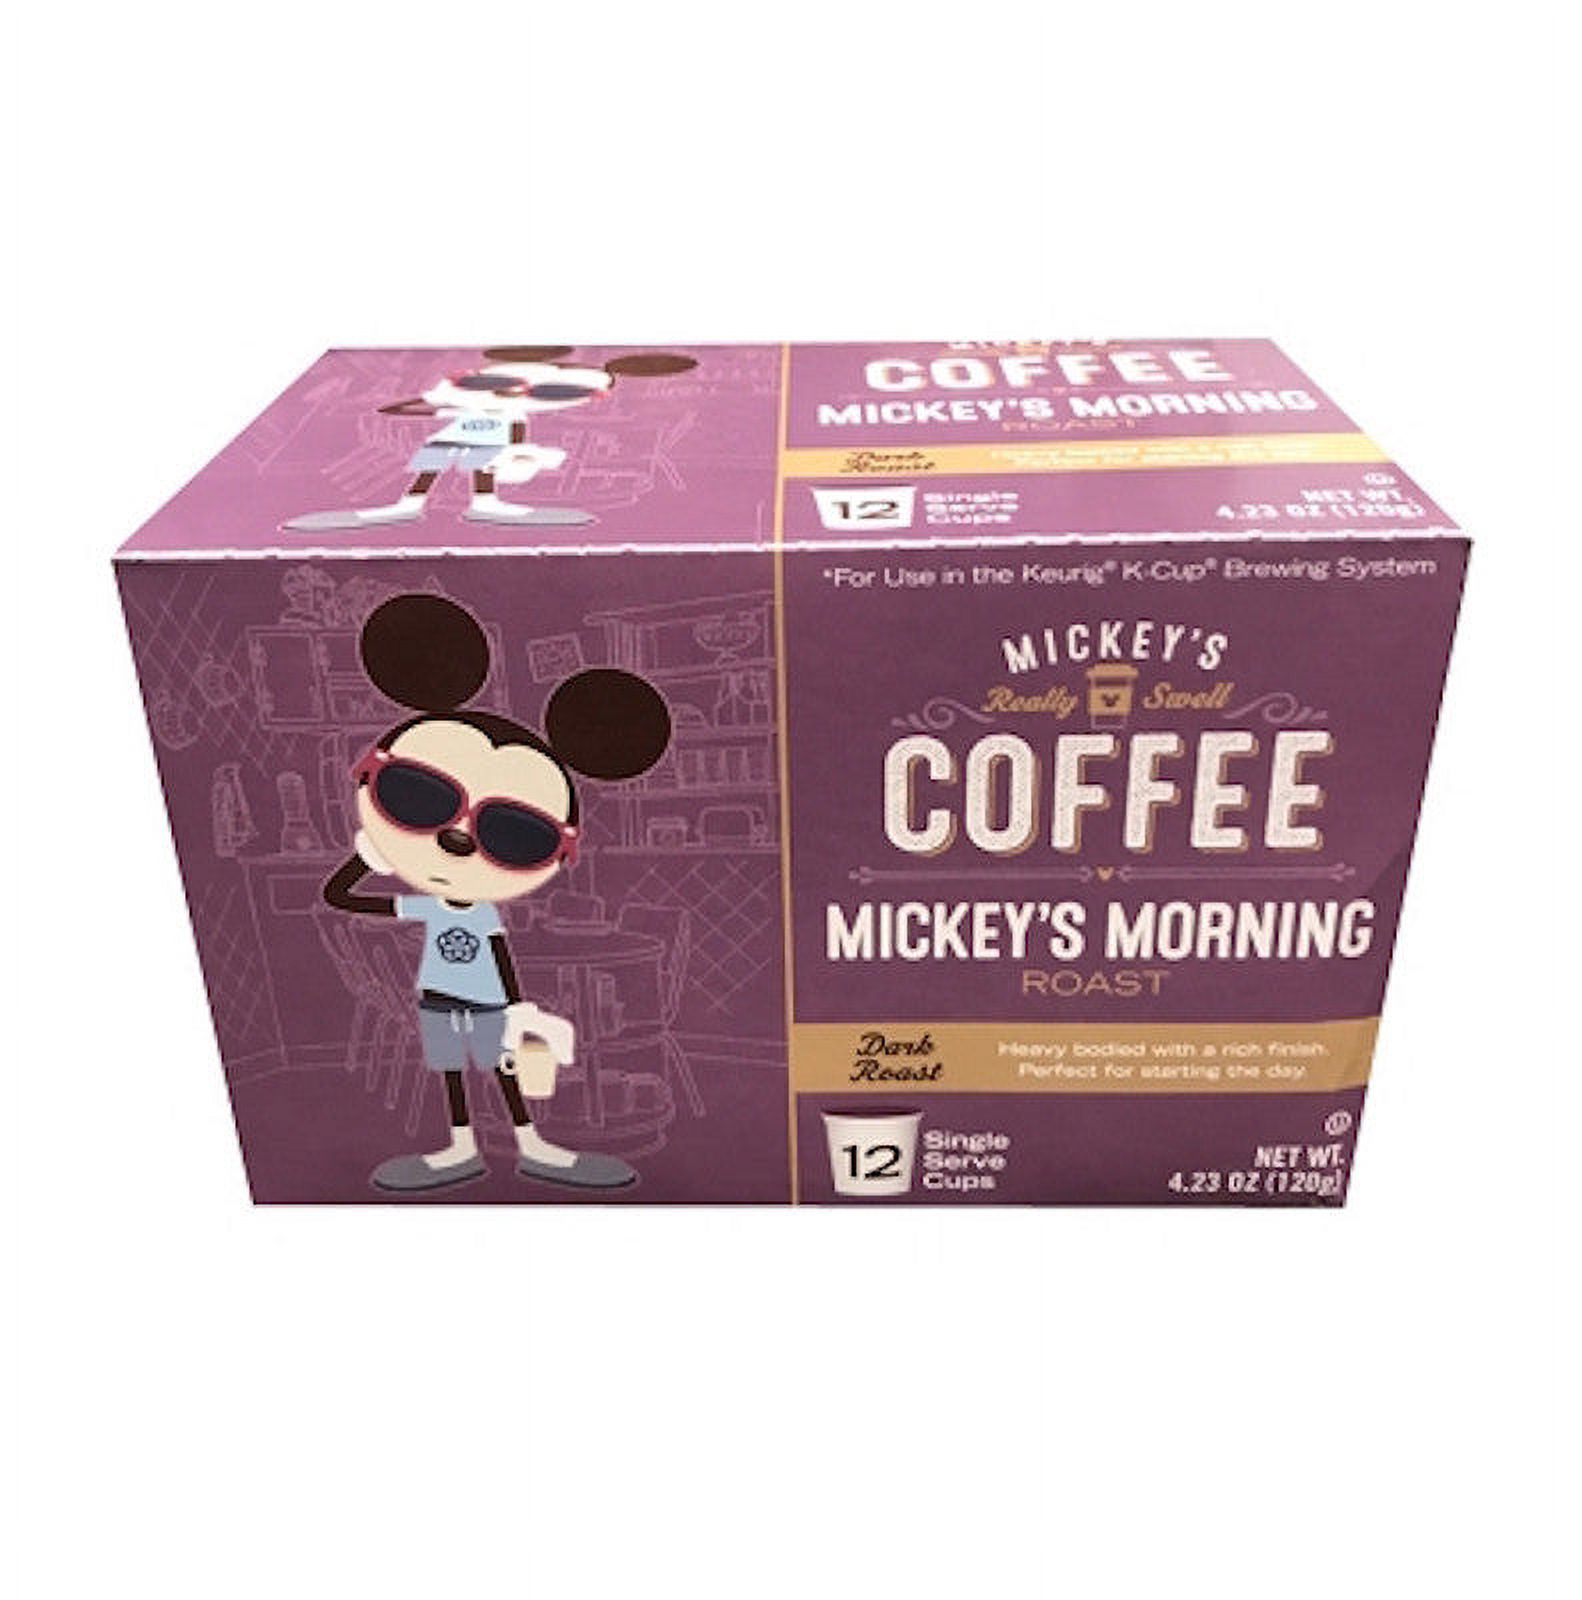 Disney Mickey's Coffee Mickey's Morning Roast 12 Keurig K-Cup New Sealed - image 2 of 3